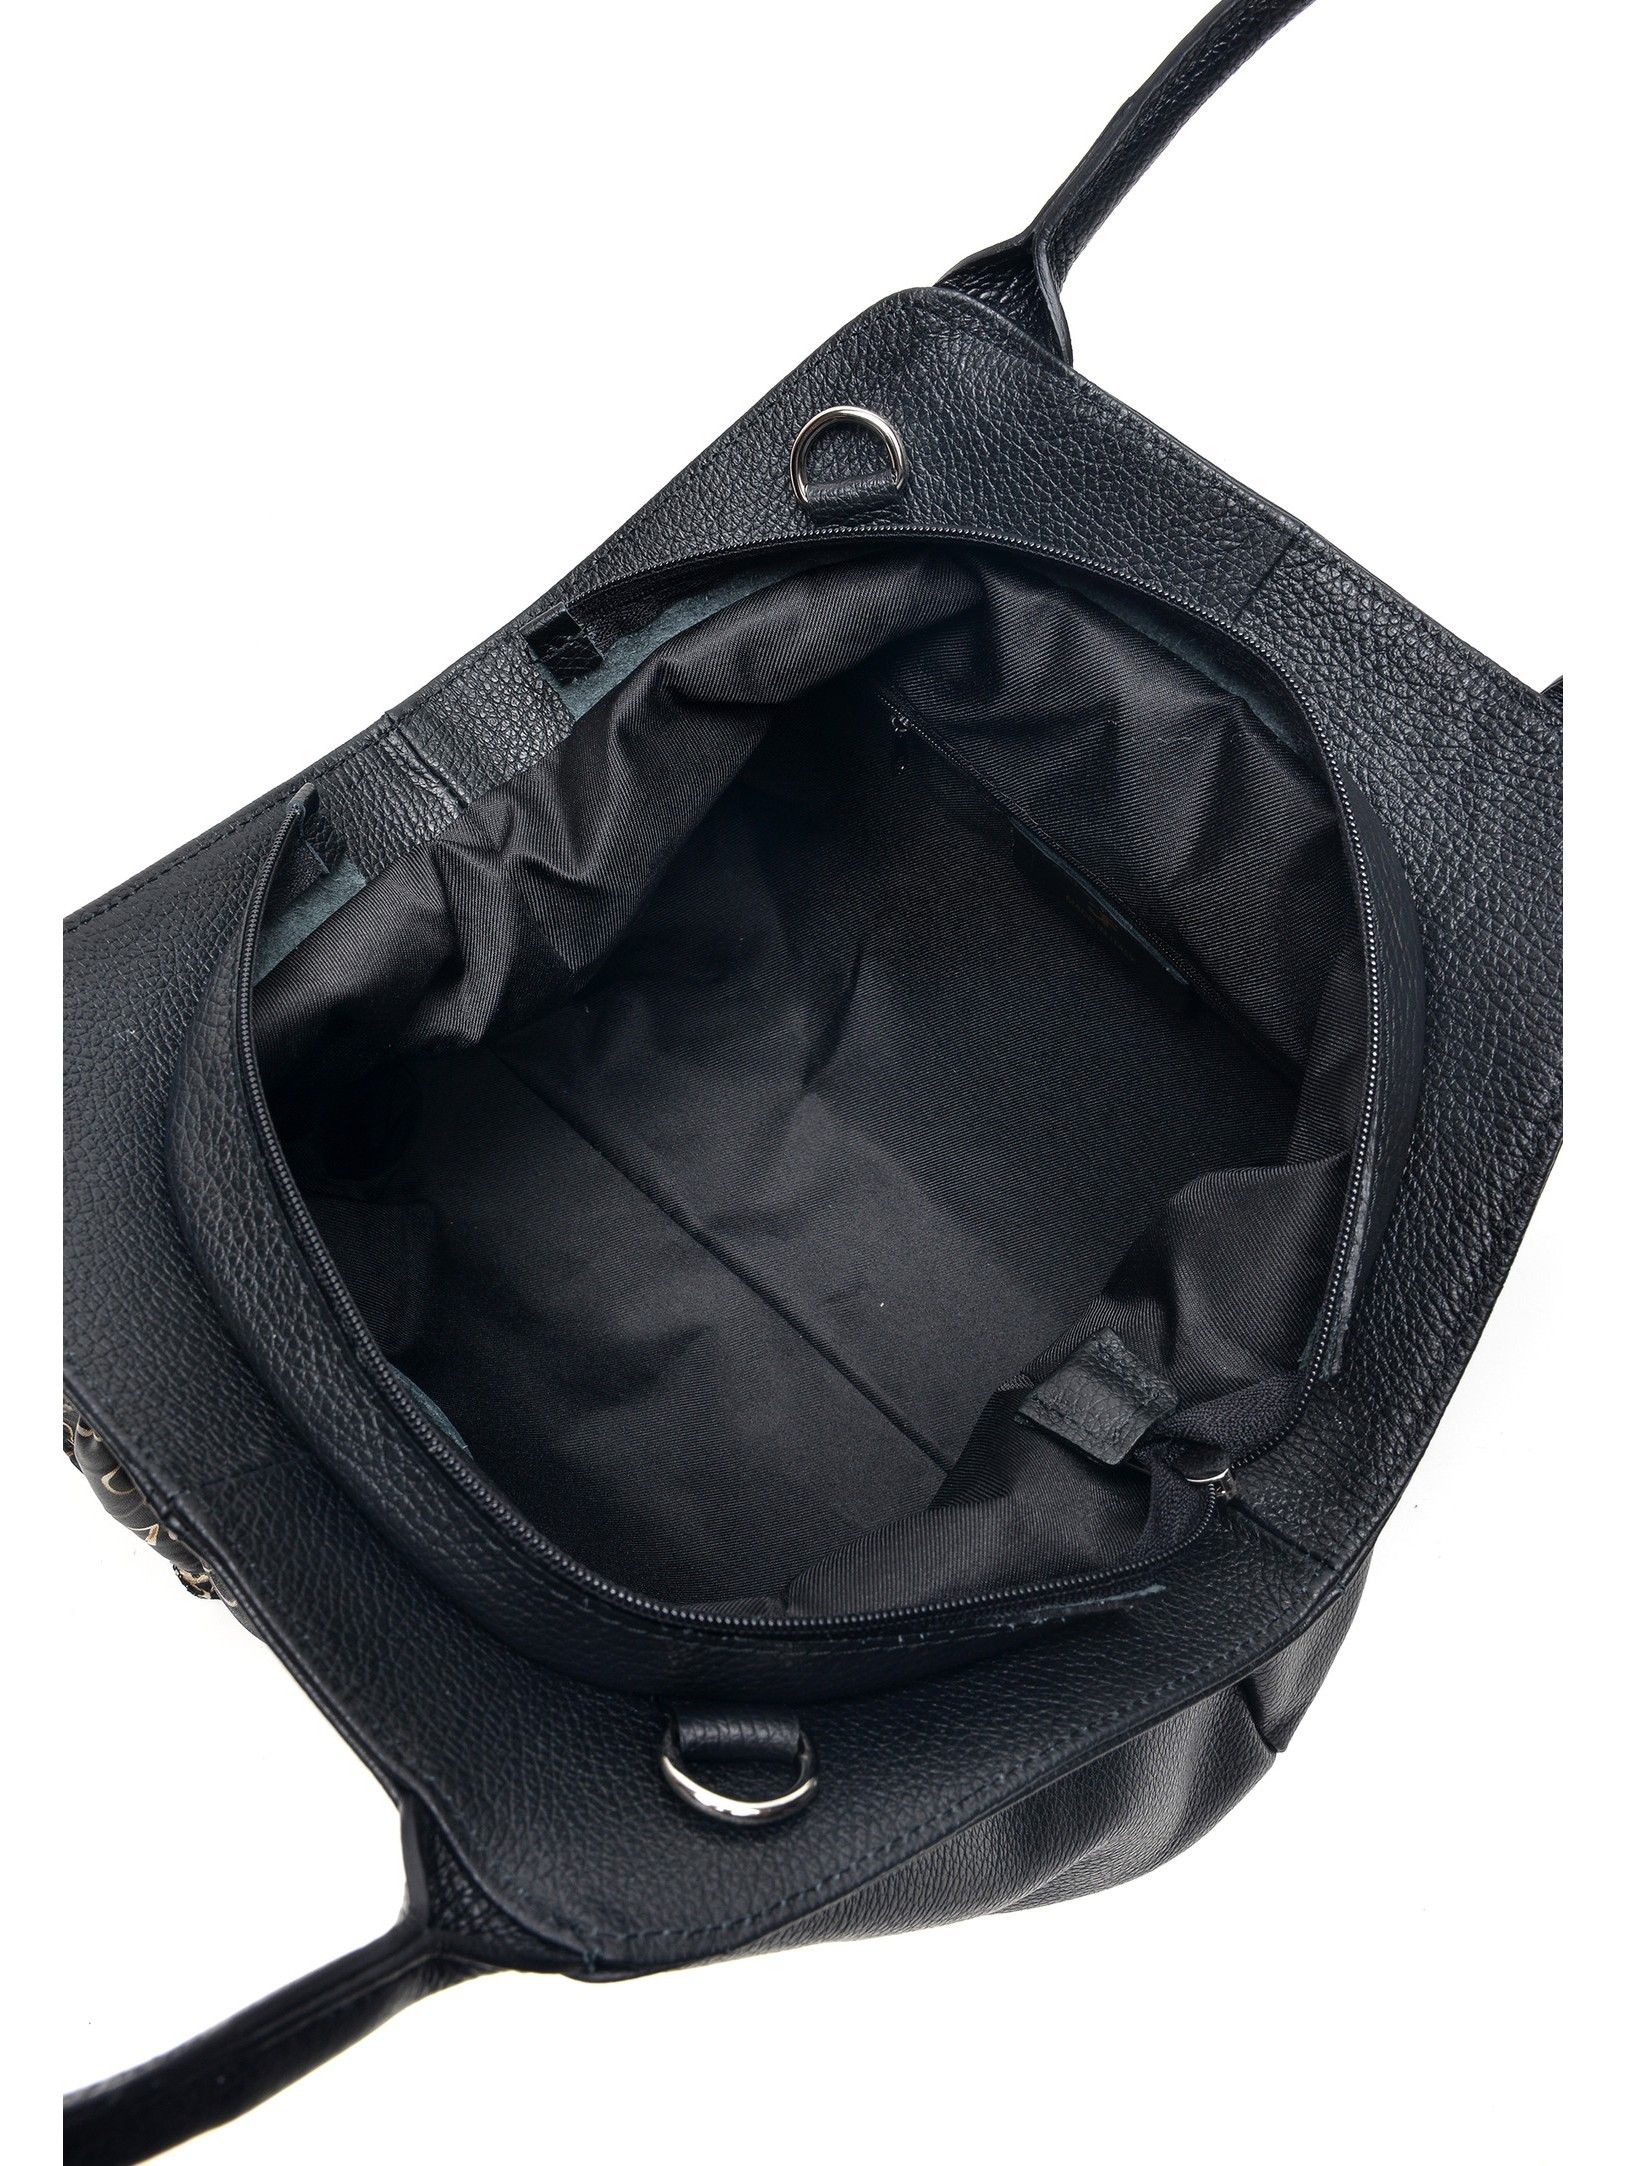 Top Handle Bag
100% cow leather
Top zip closure
Inner zipped pocket
Ribbon detail
Dimensions(L):30x38x13 cm
Handle:40 cm
Shoulder strap:120 cm